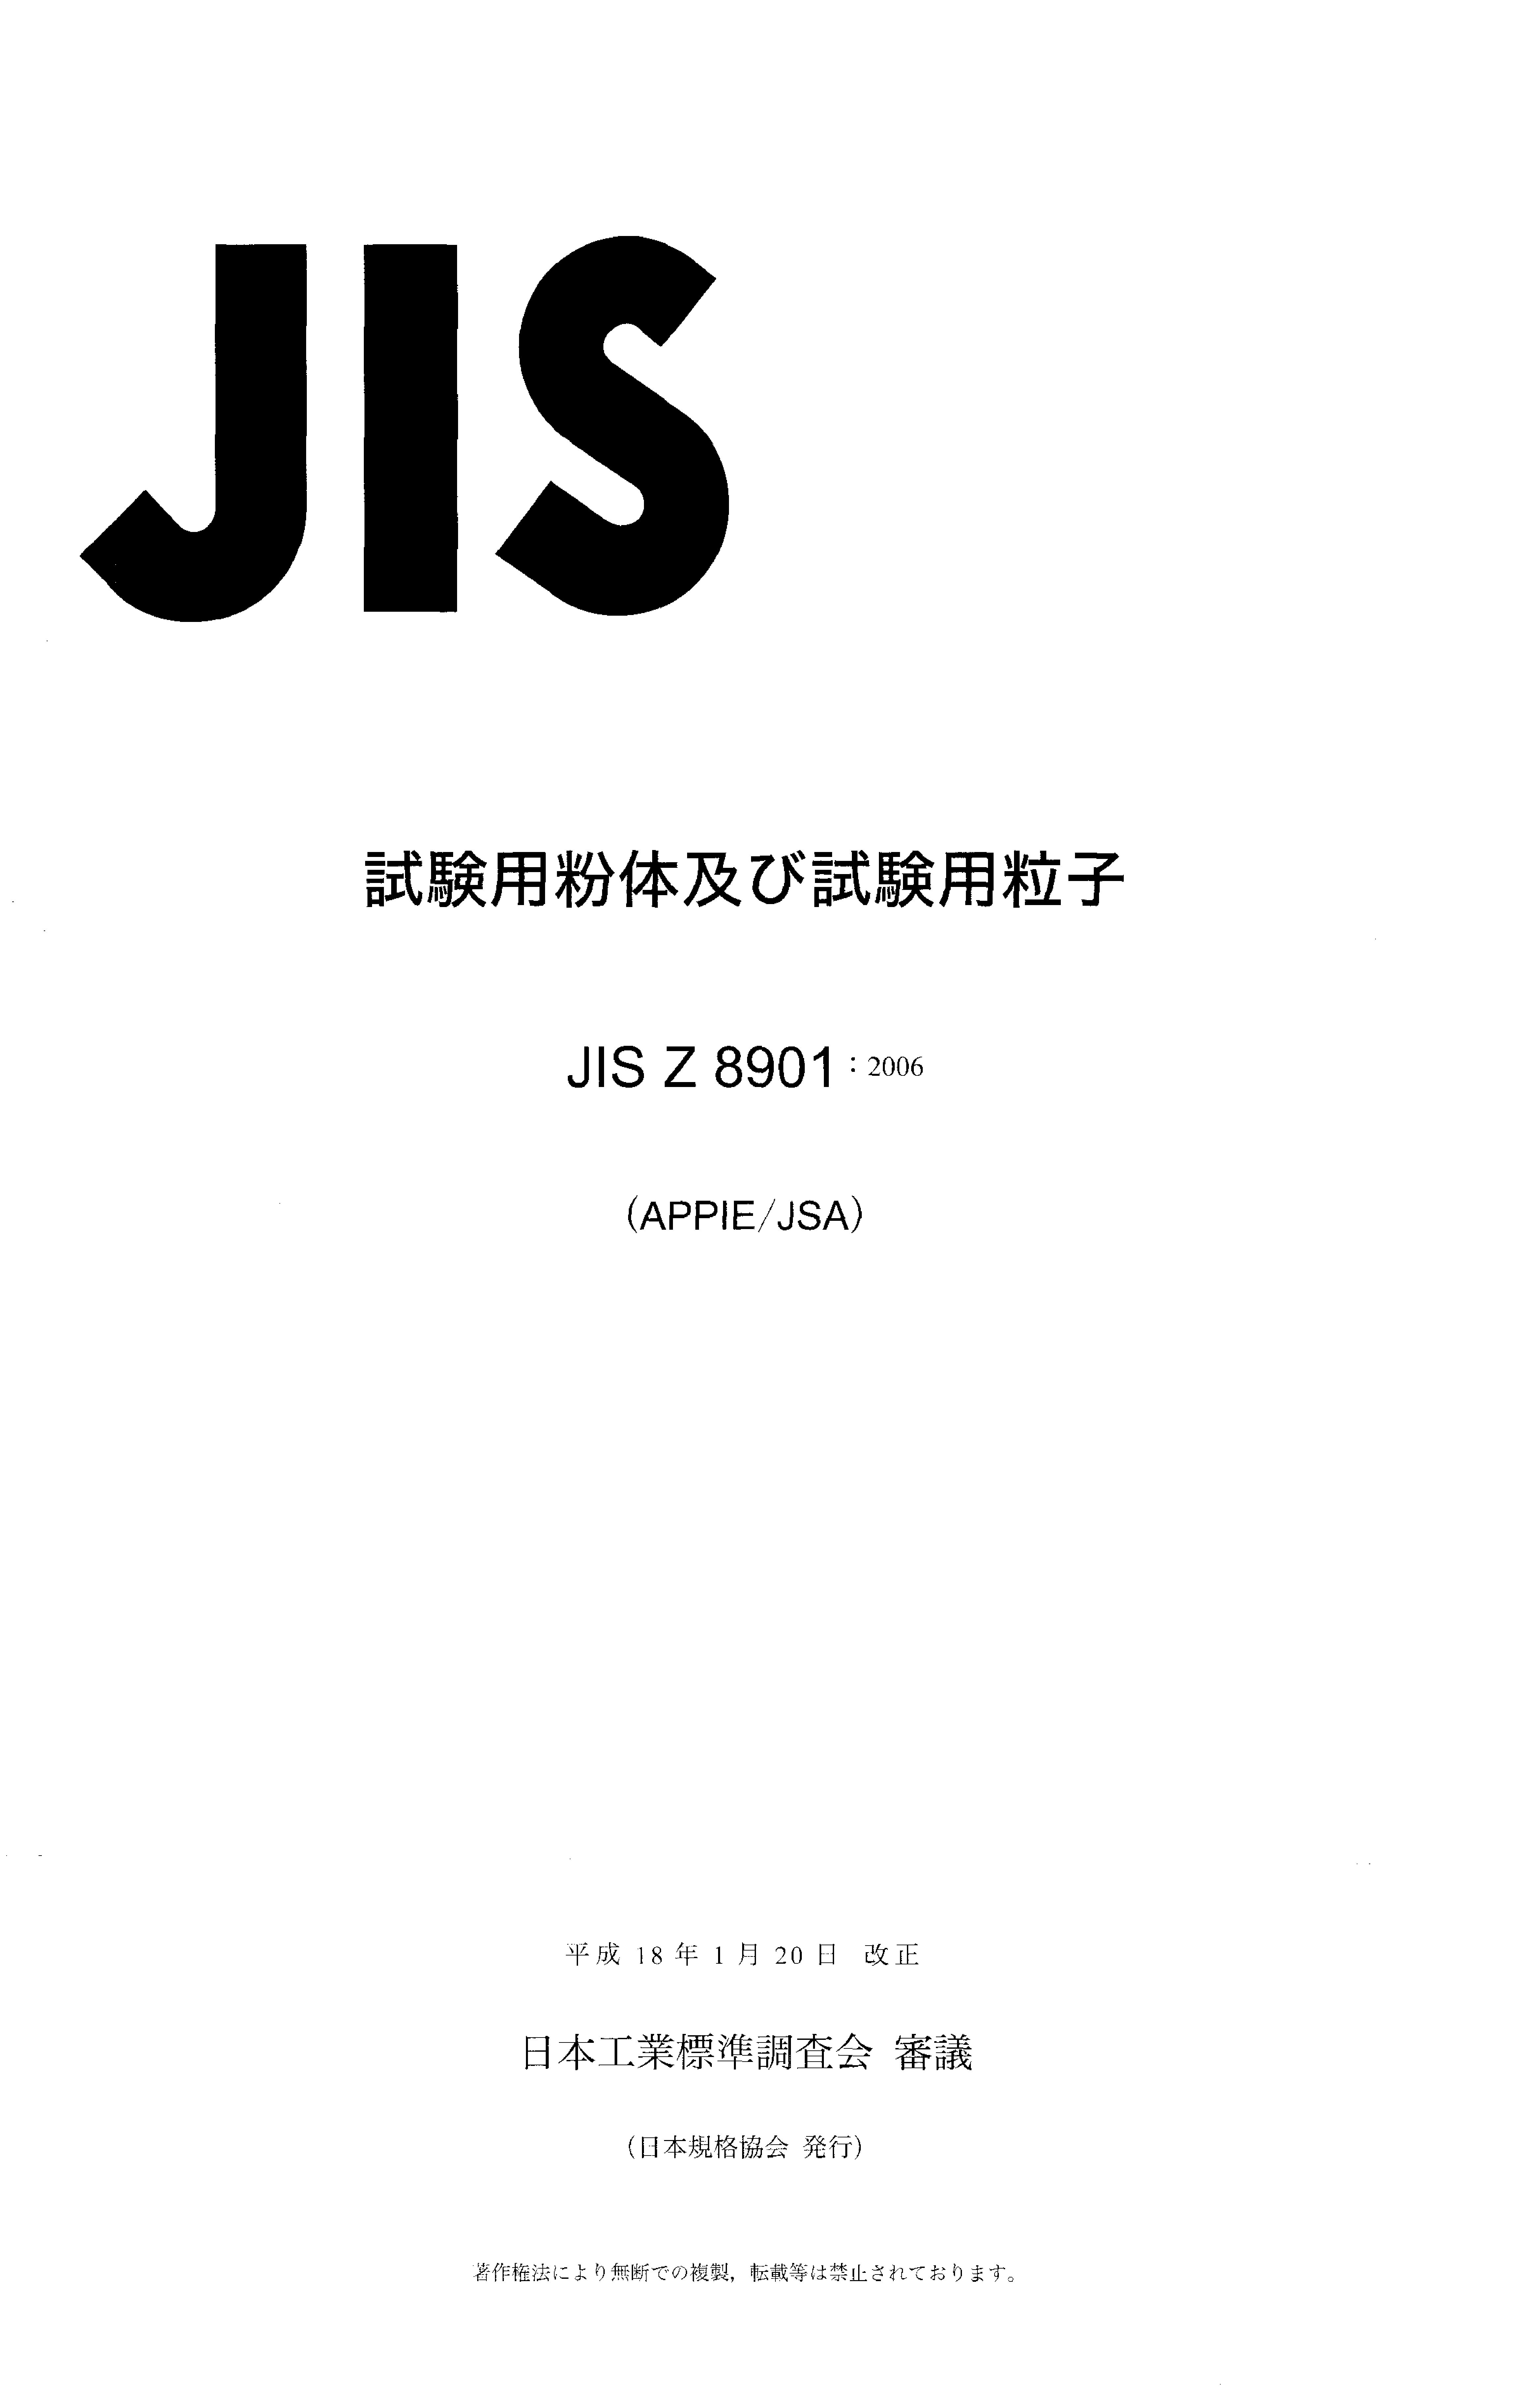 JIS Z 8901:2006封面图